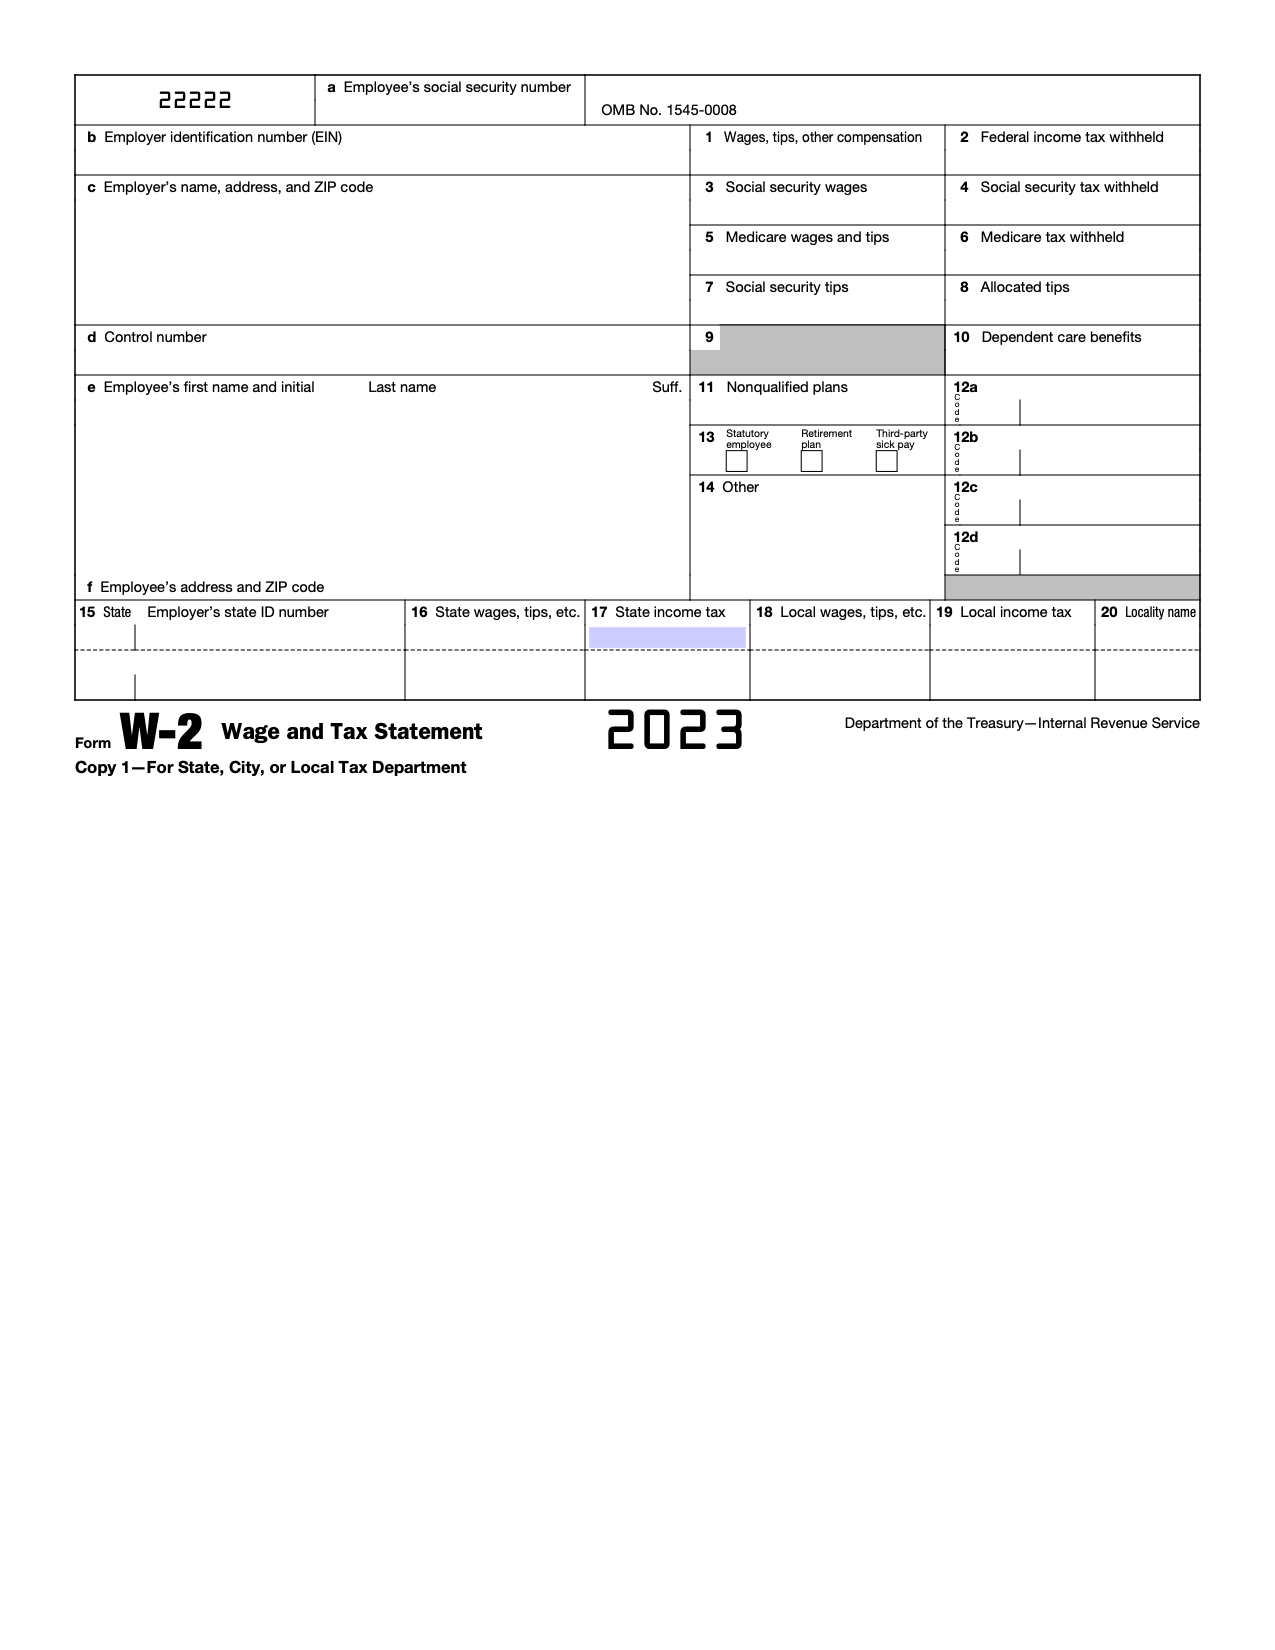 Free Irs Form W-2 | Wage And Tax Statement - Pdf – Eforms regarding Editable W2 Form